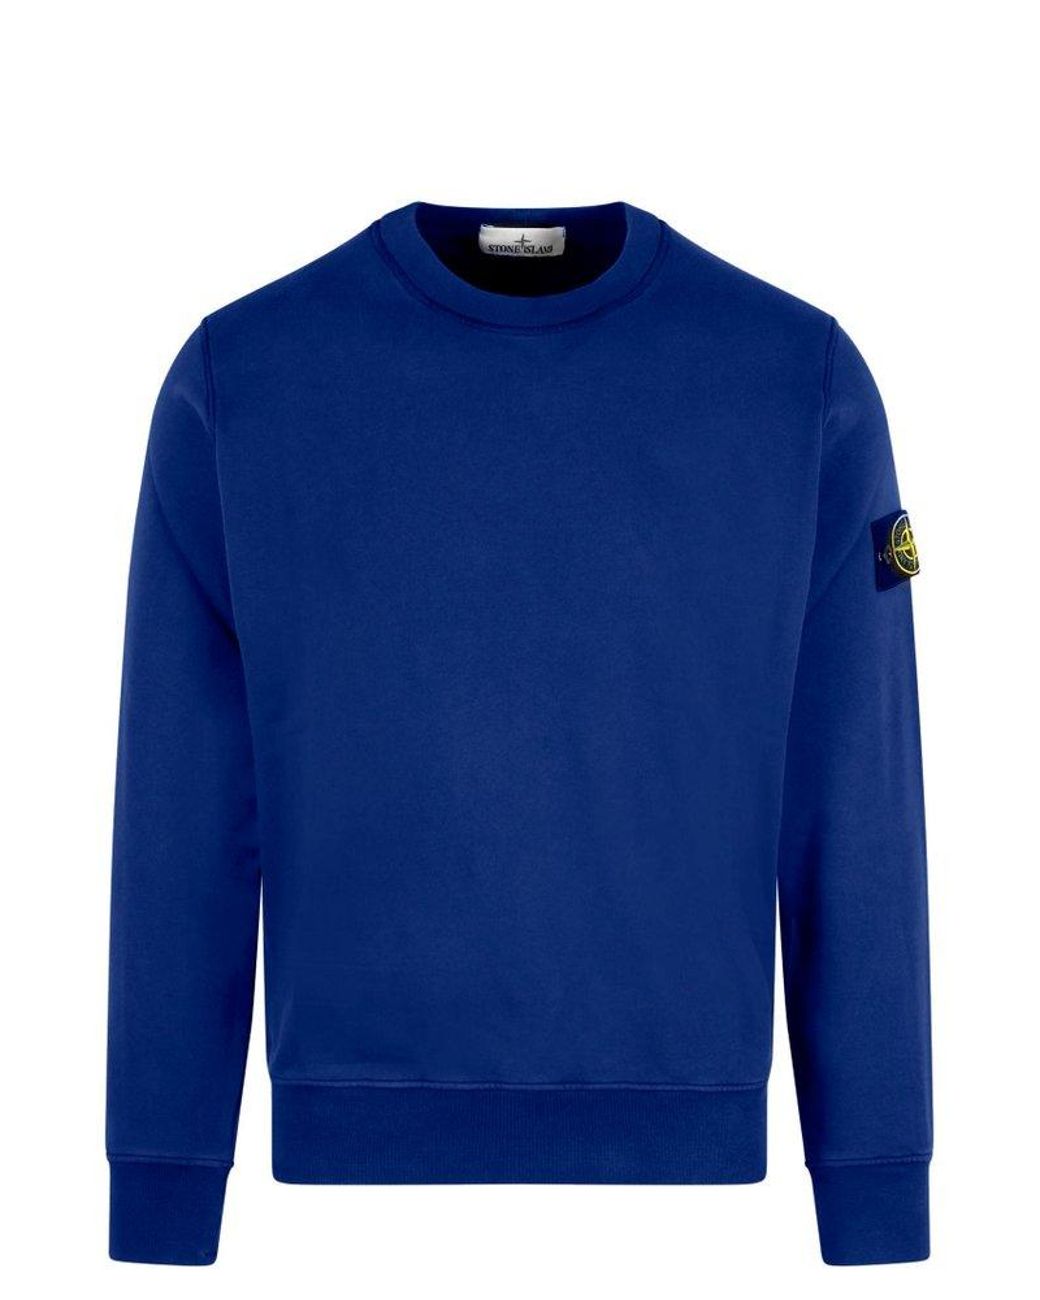 Stone Island Logo Patch Crewneck Sweatshirt in Blue for Men | Lyst